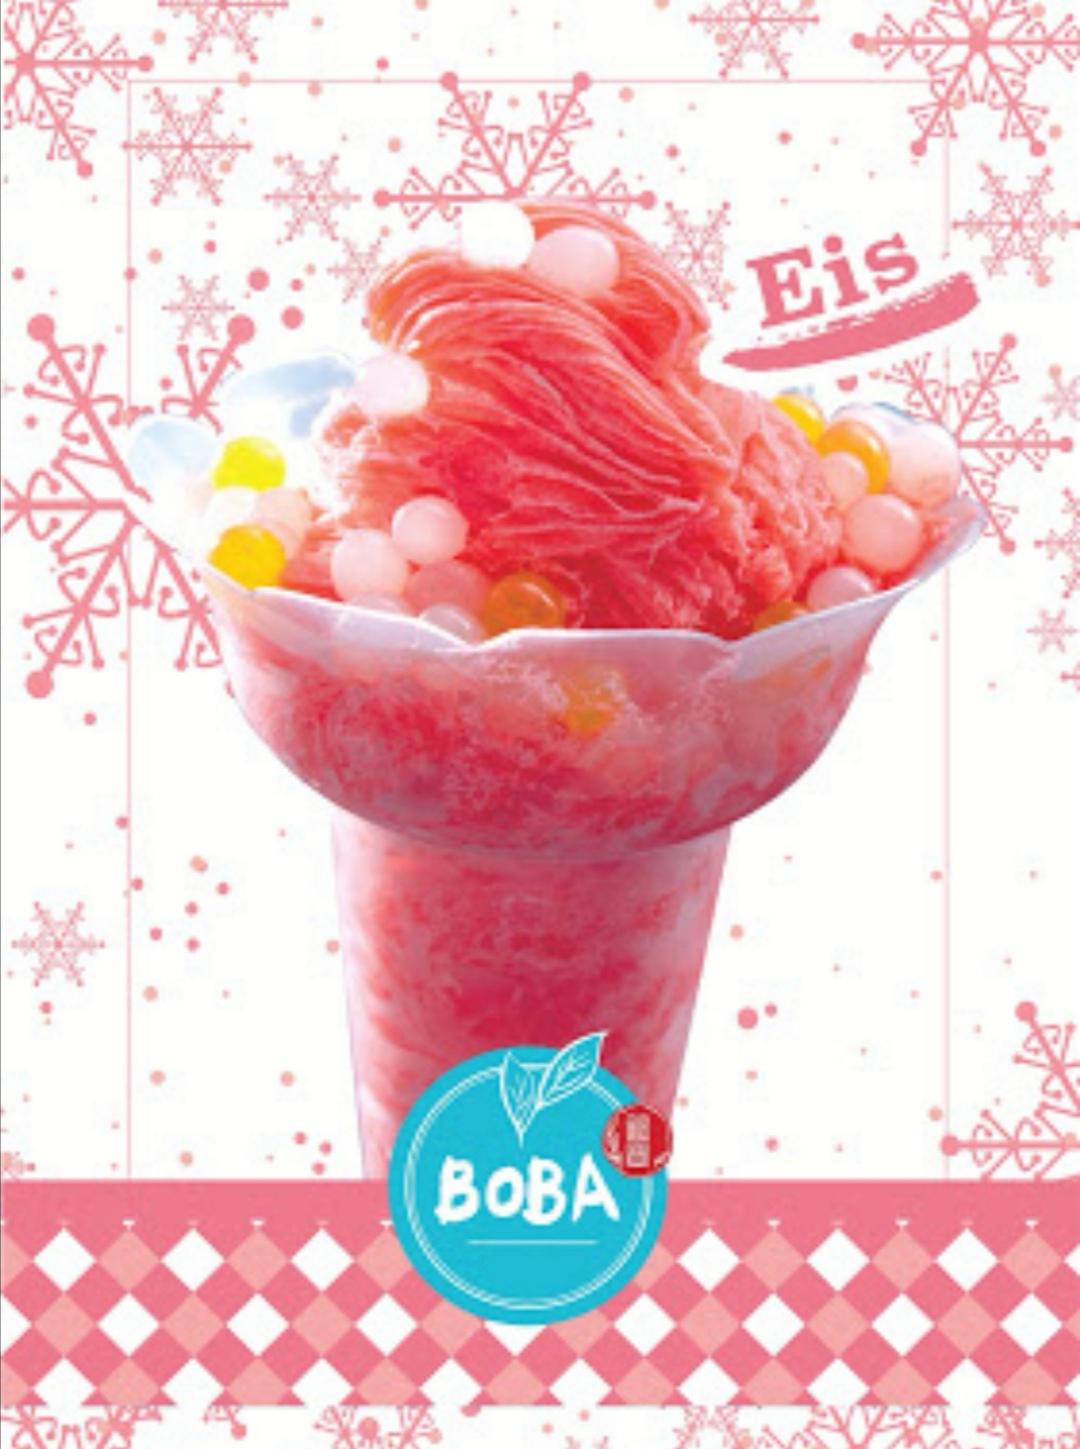 BOBA Eis&Tea Boba Vienna Wien 0699 10086760